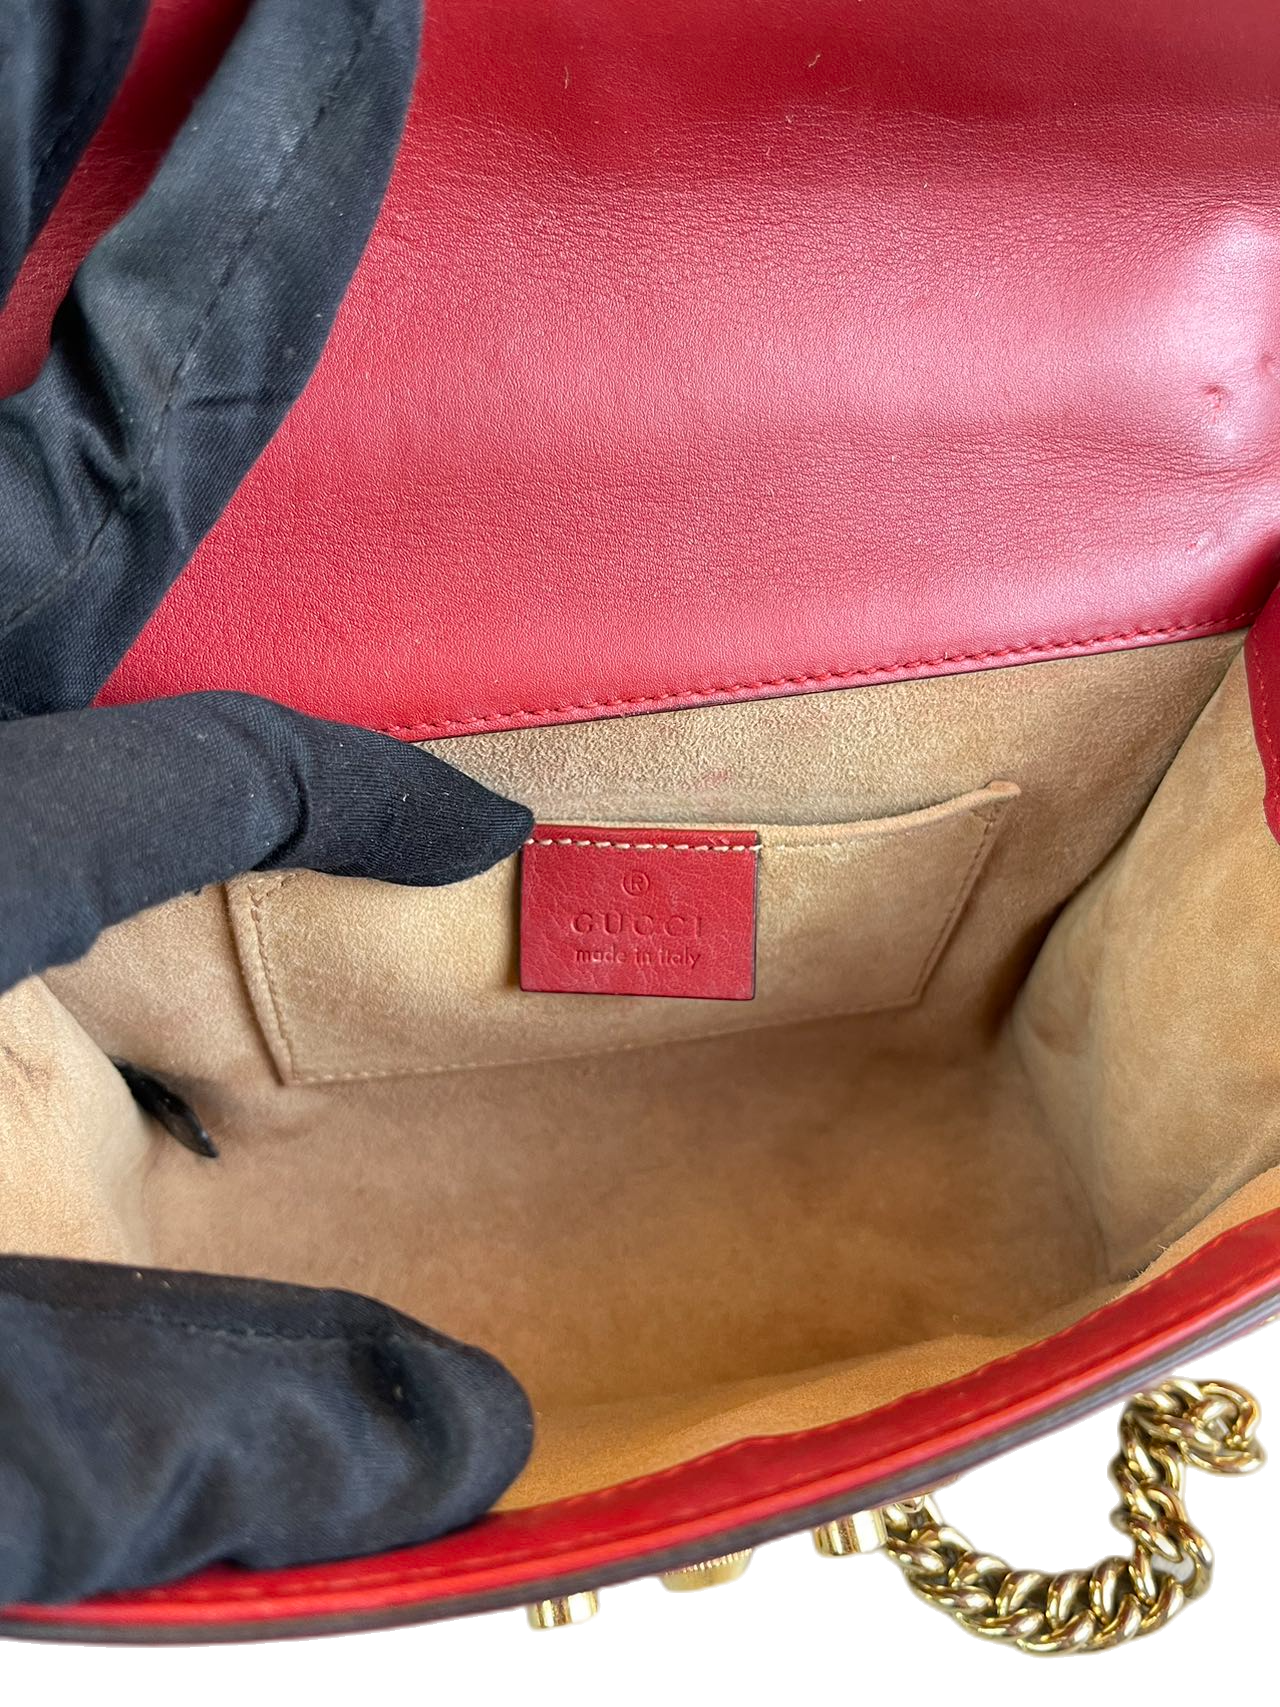 Preloved Gucci Red Leather Padlock Shoulders Bag Crossbody